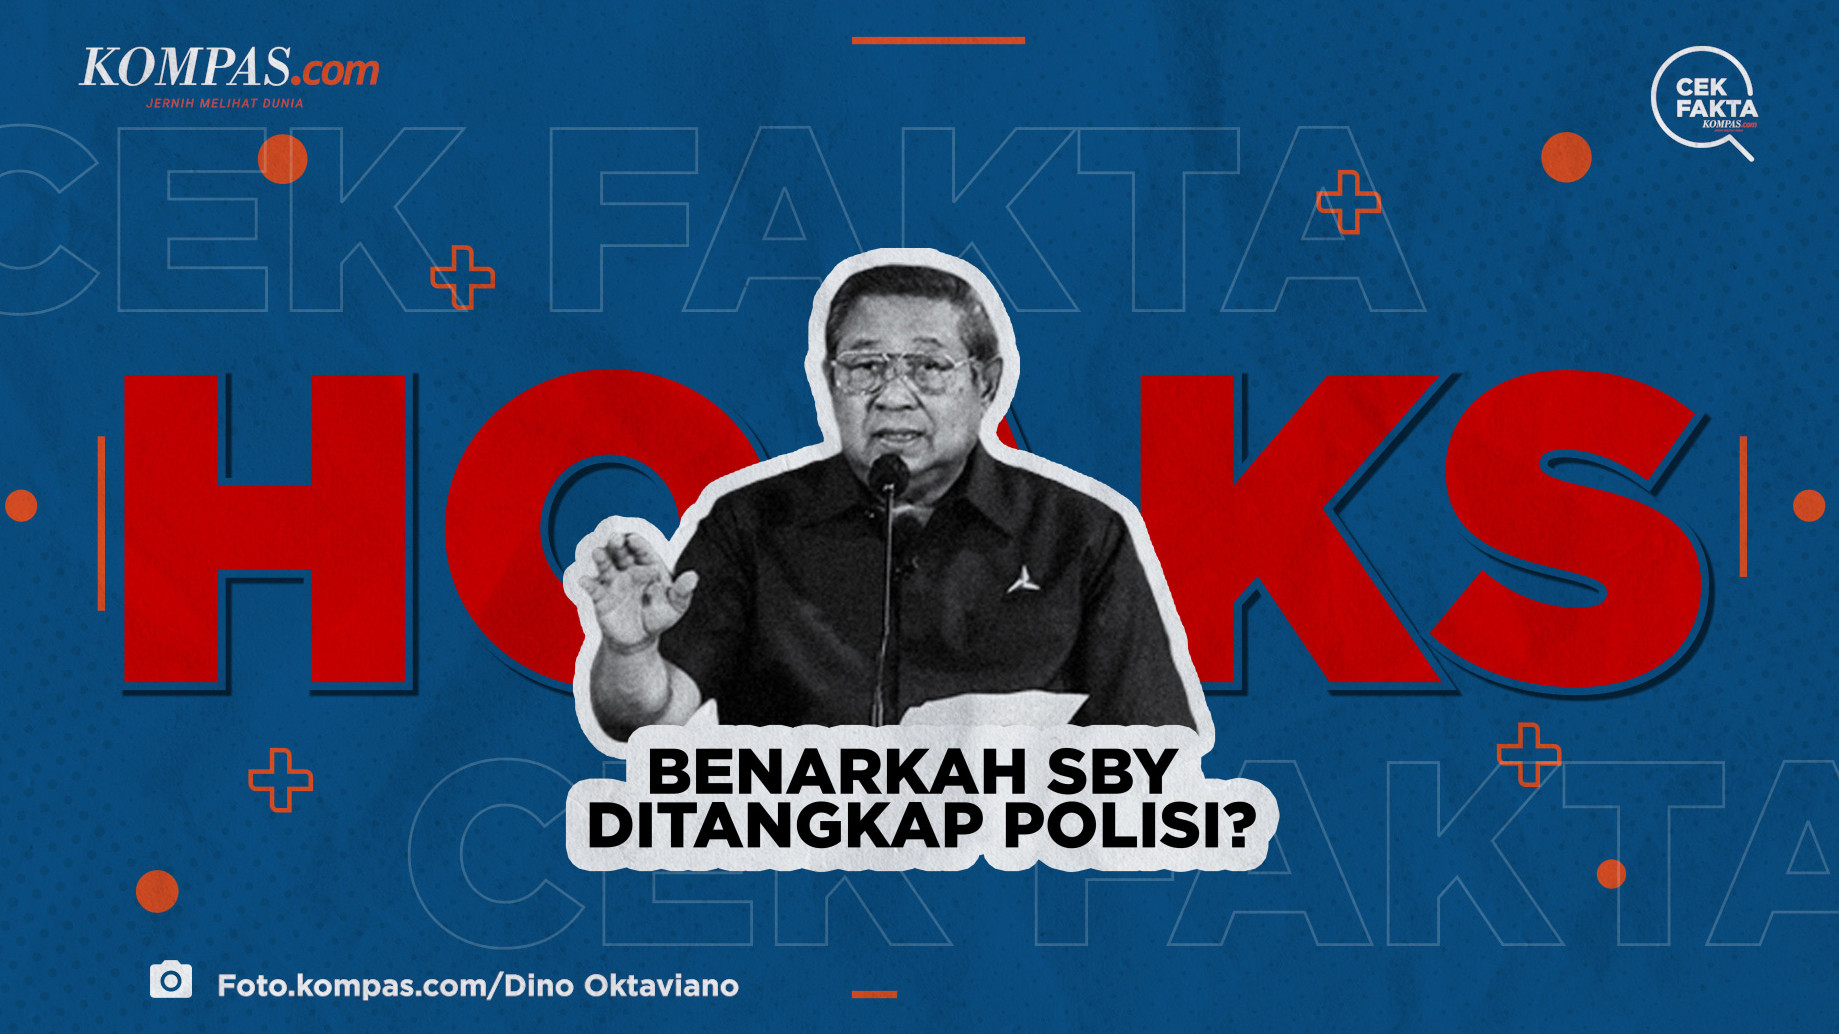 Benarkah SBY Ditangkap Polisi?